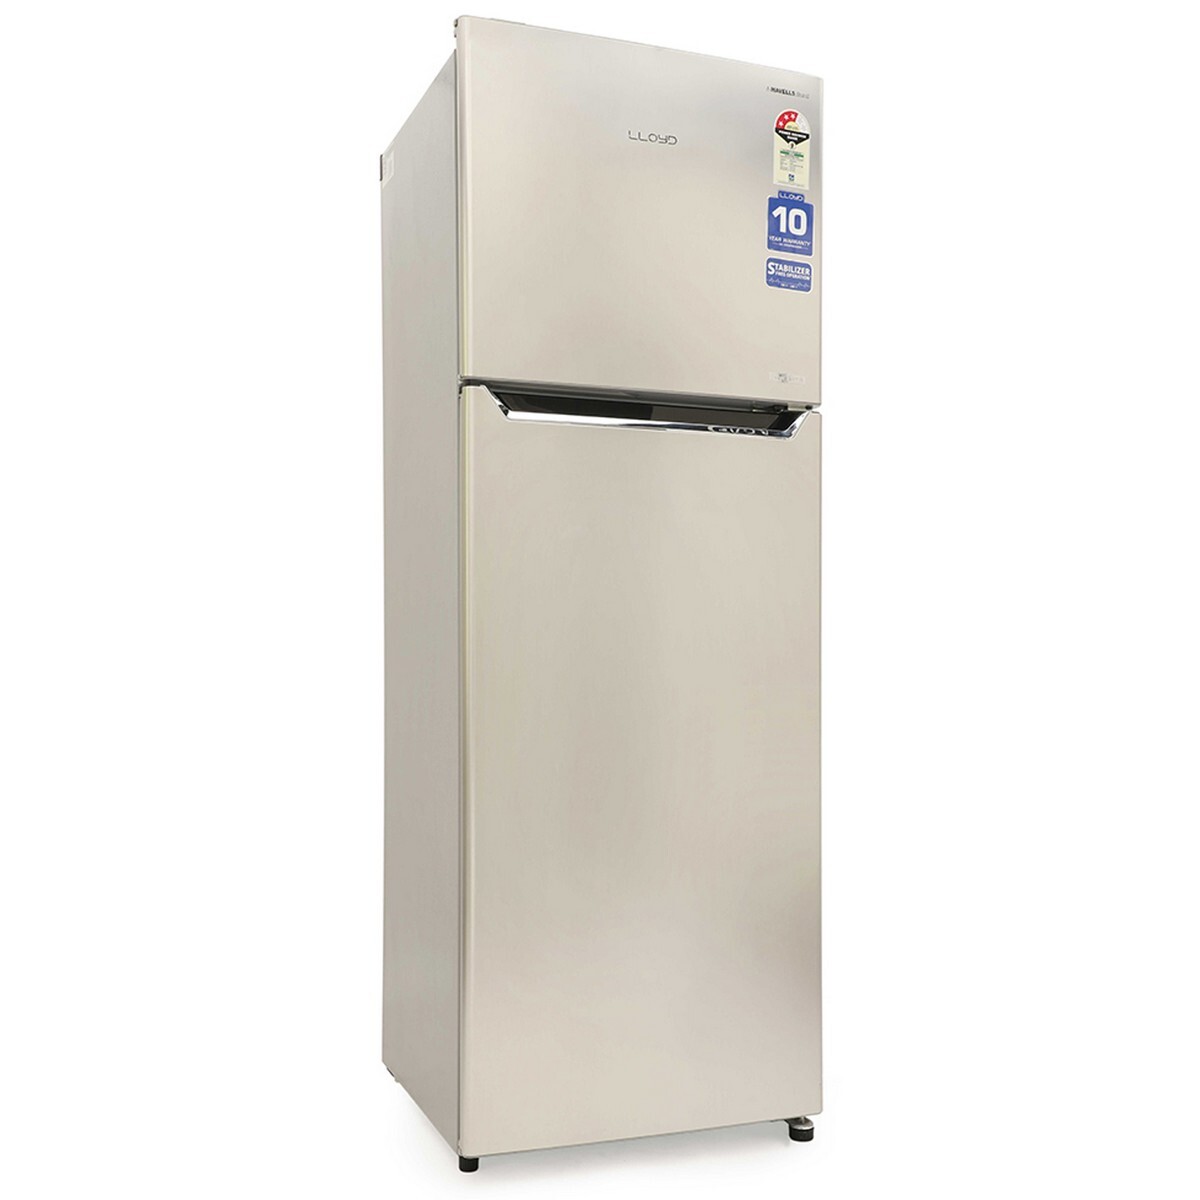 Lloyd Frost Free Refrigerator GLFF343ADST1PB 340 Ltr